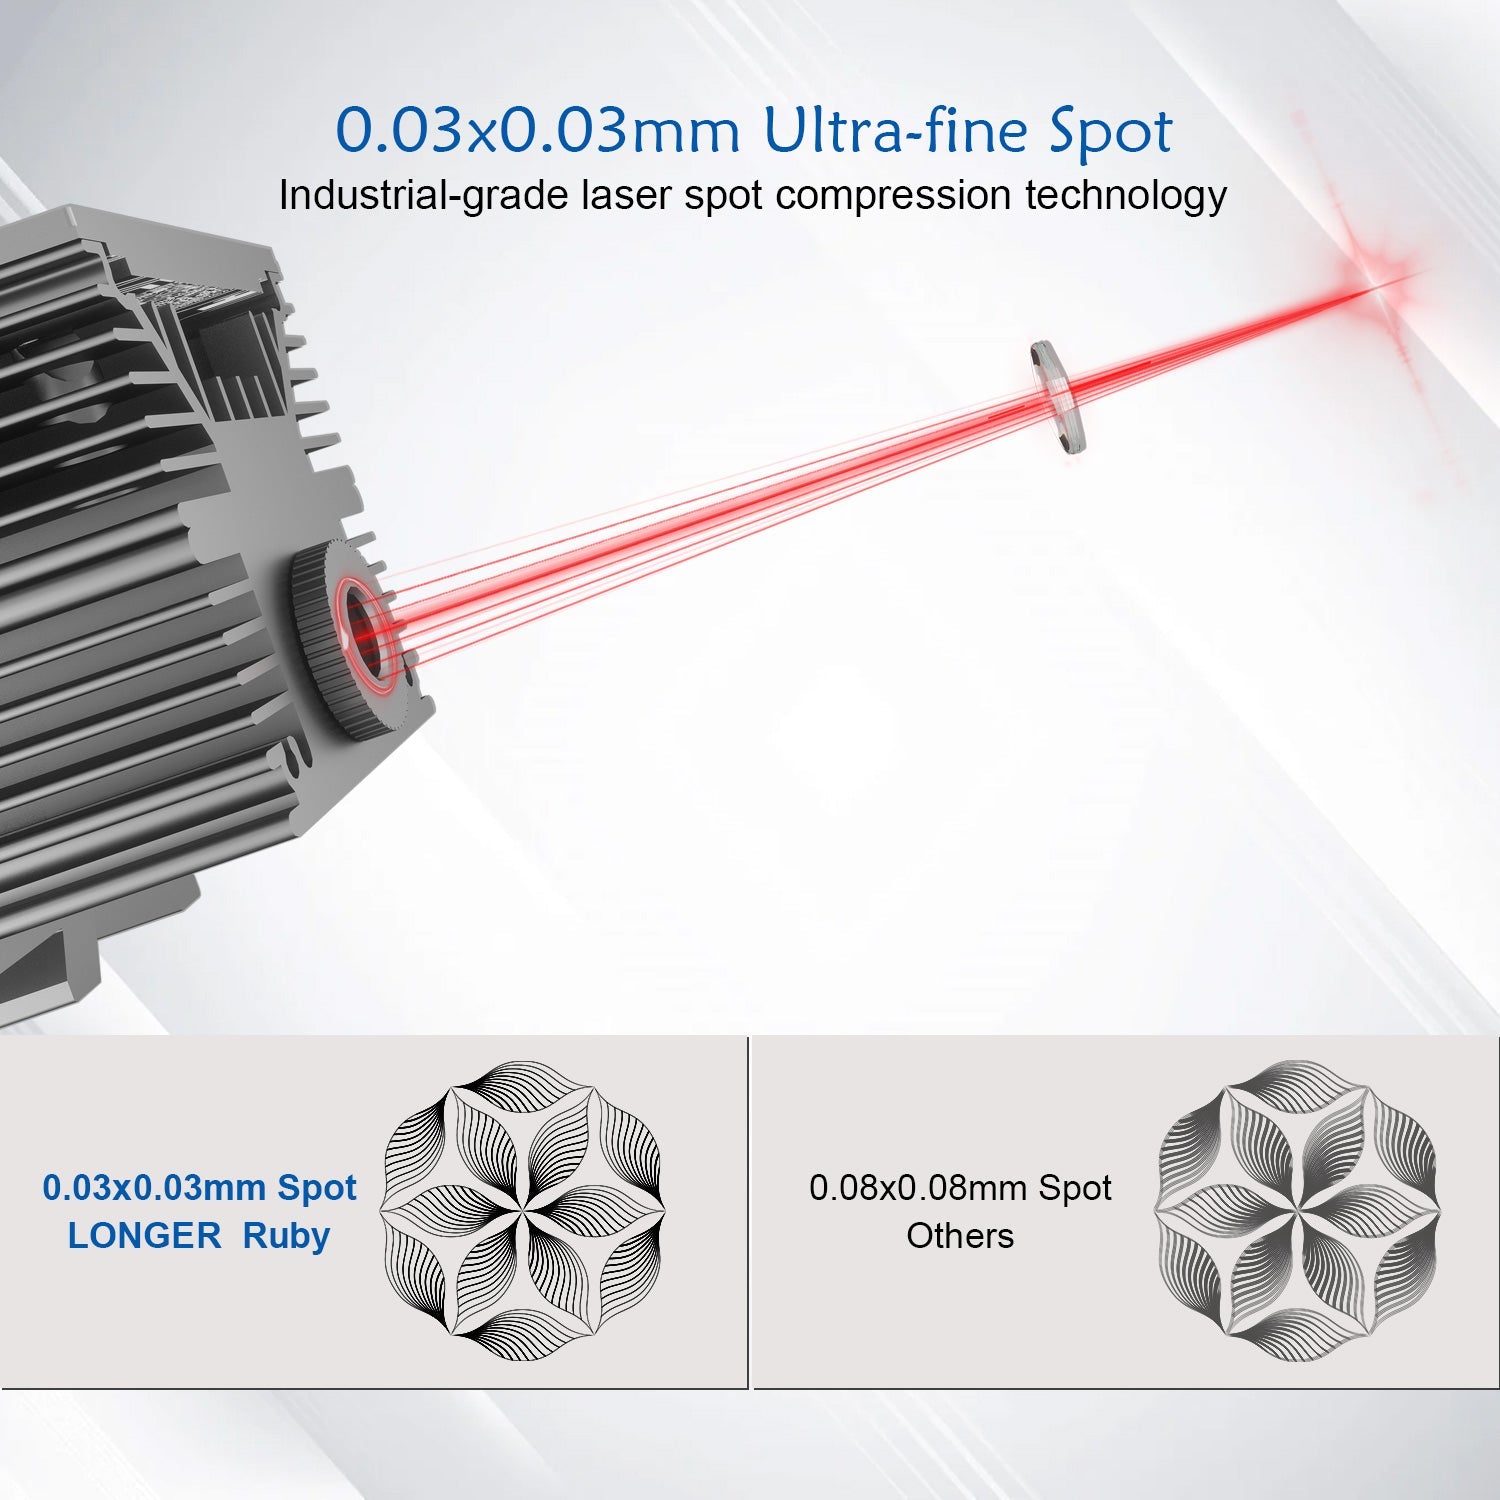 LONGER Ruby Pulsed Infrared Laser Module for Laser B1 / RAY5 20W(5 pin) - LONGER